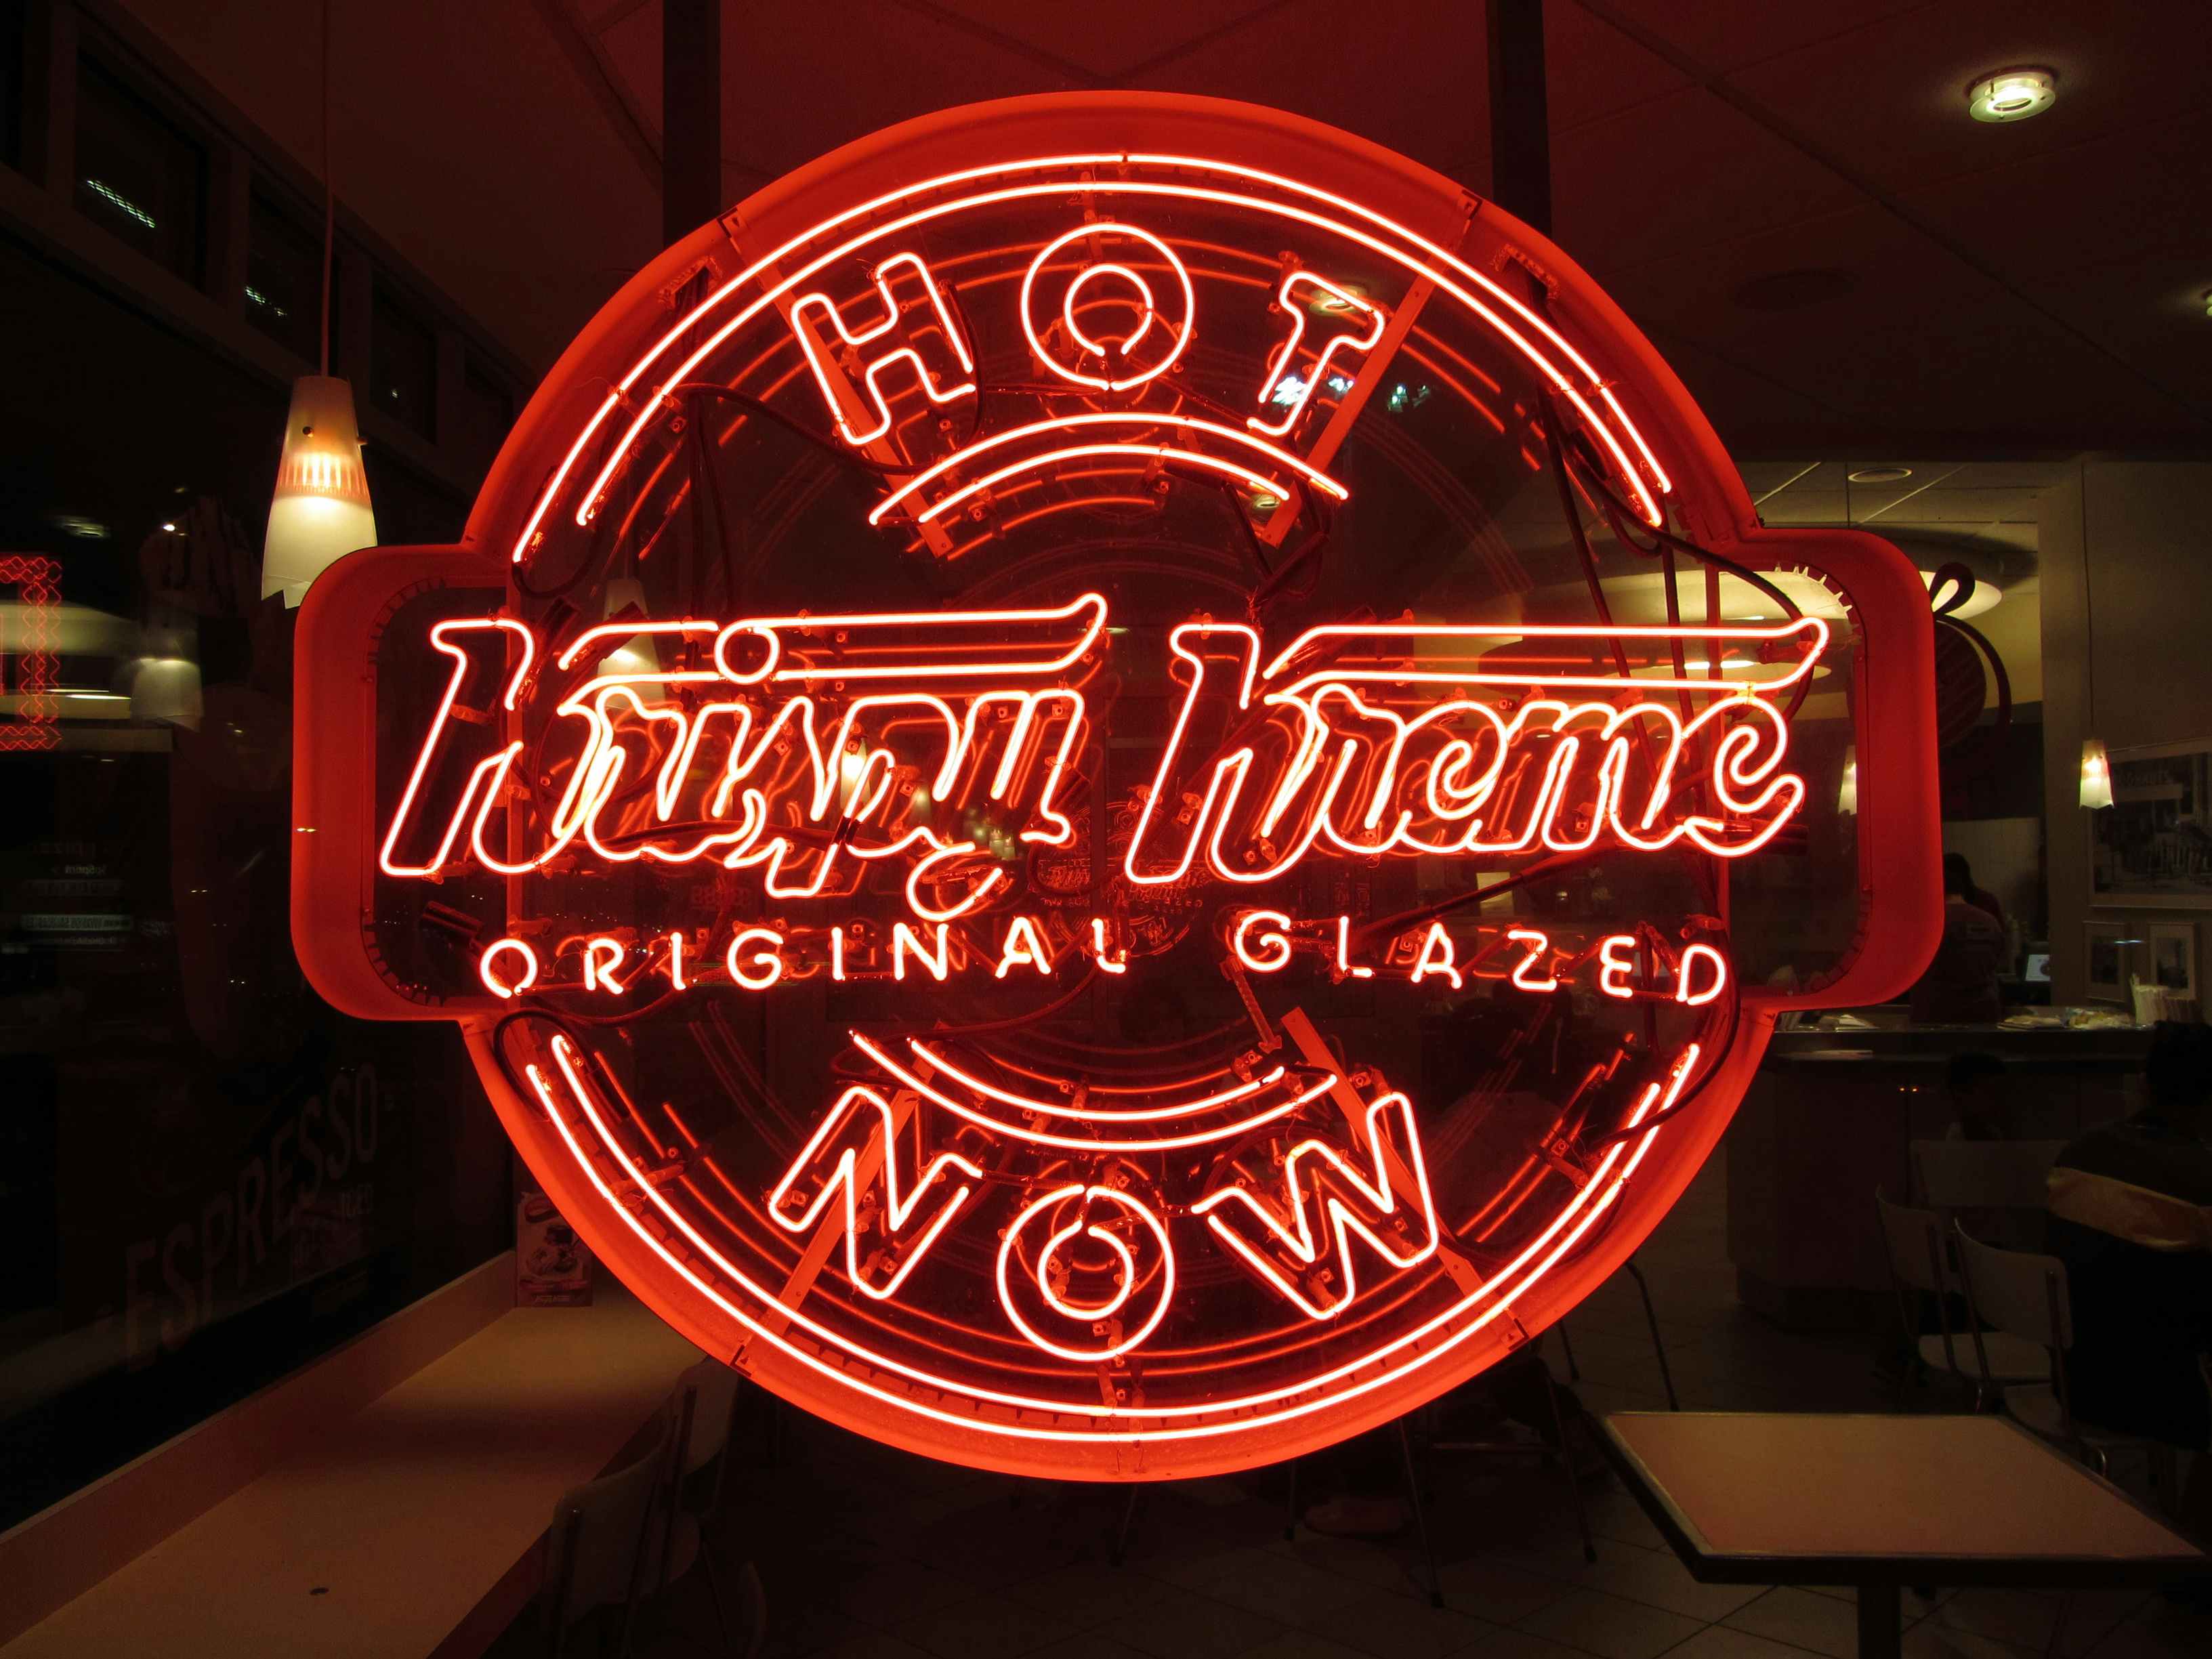 The Krispy Kreme Hot Now sign lit up red.